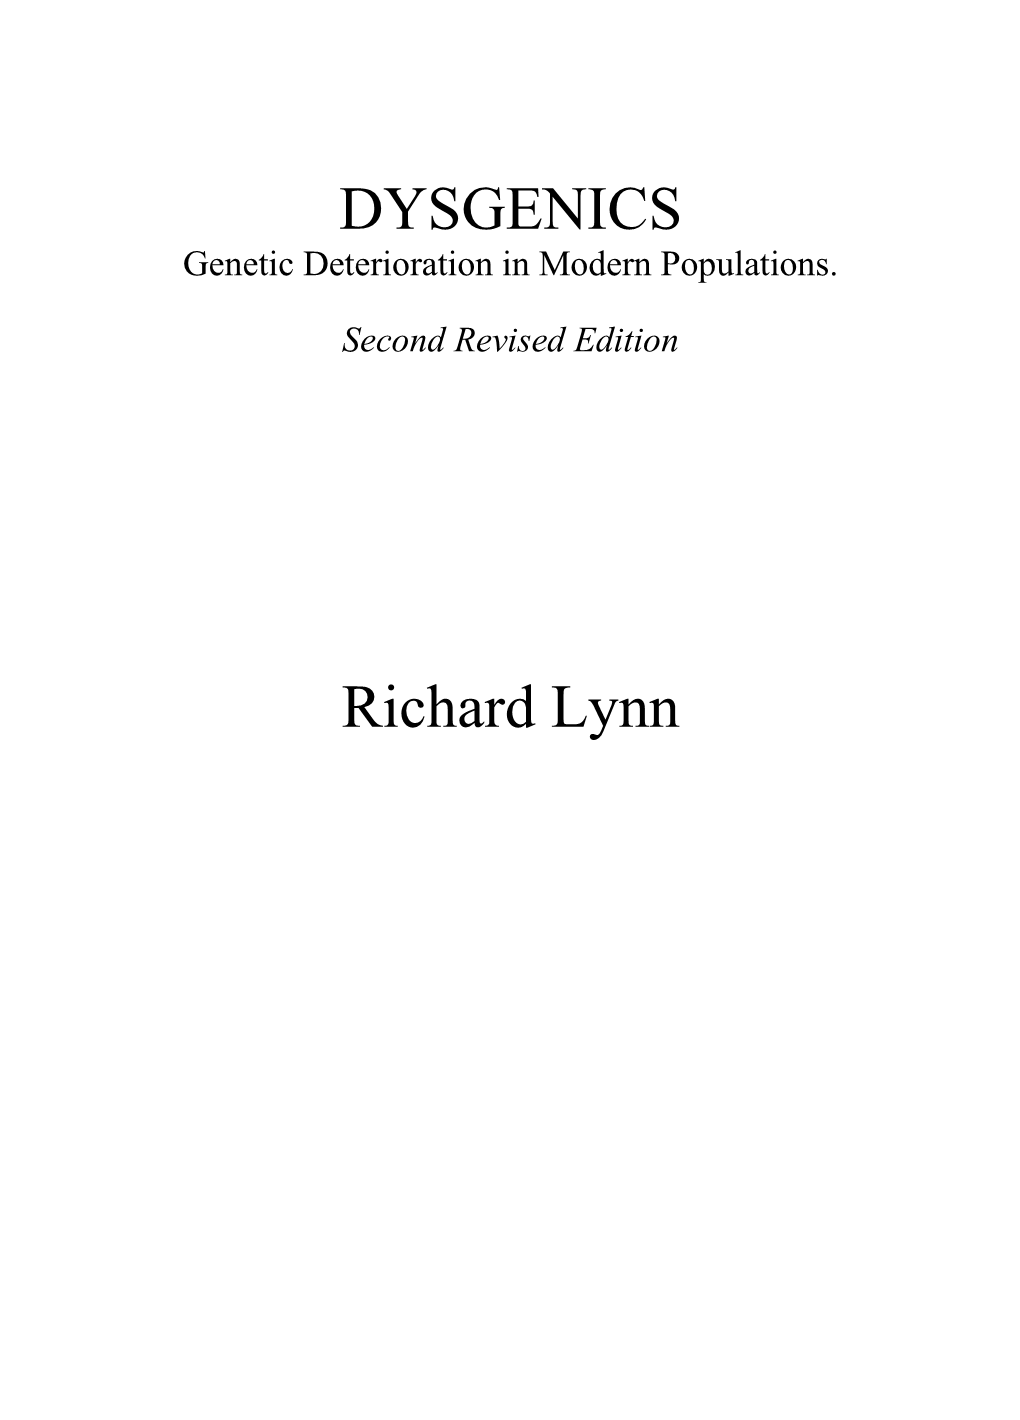 DYSGENICS: Genetic Deterioration in Modern Populations